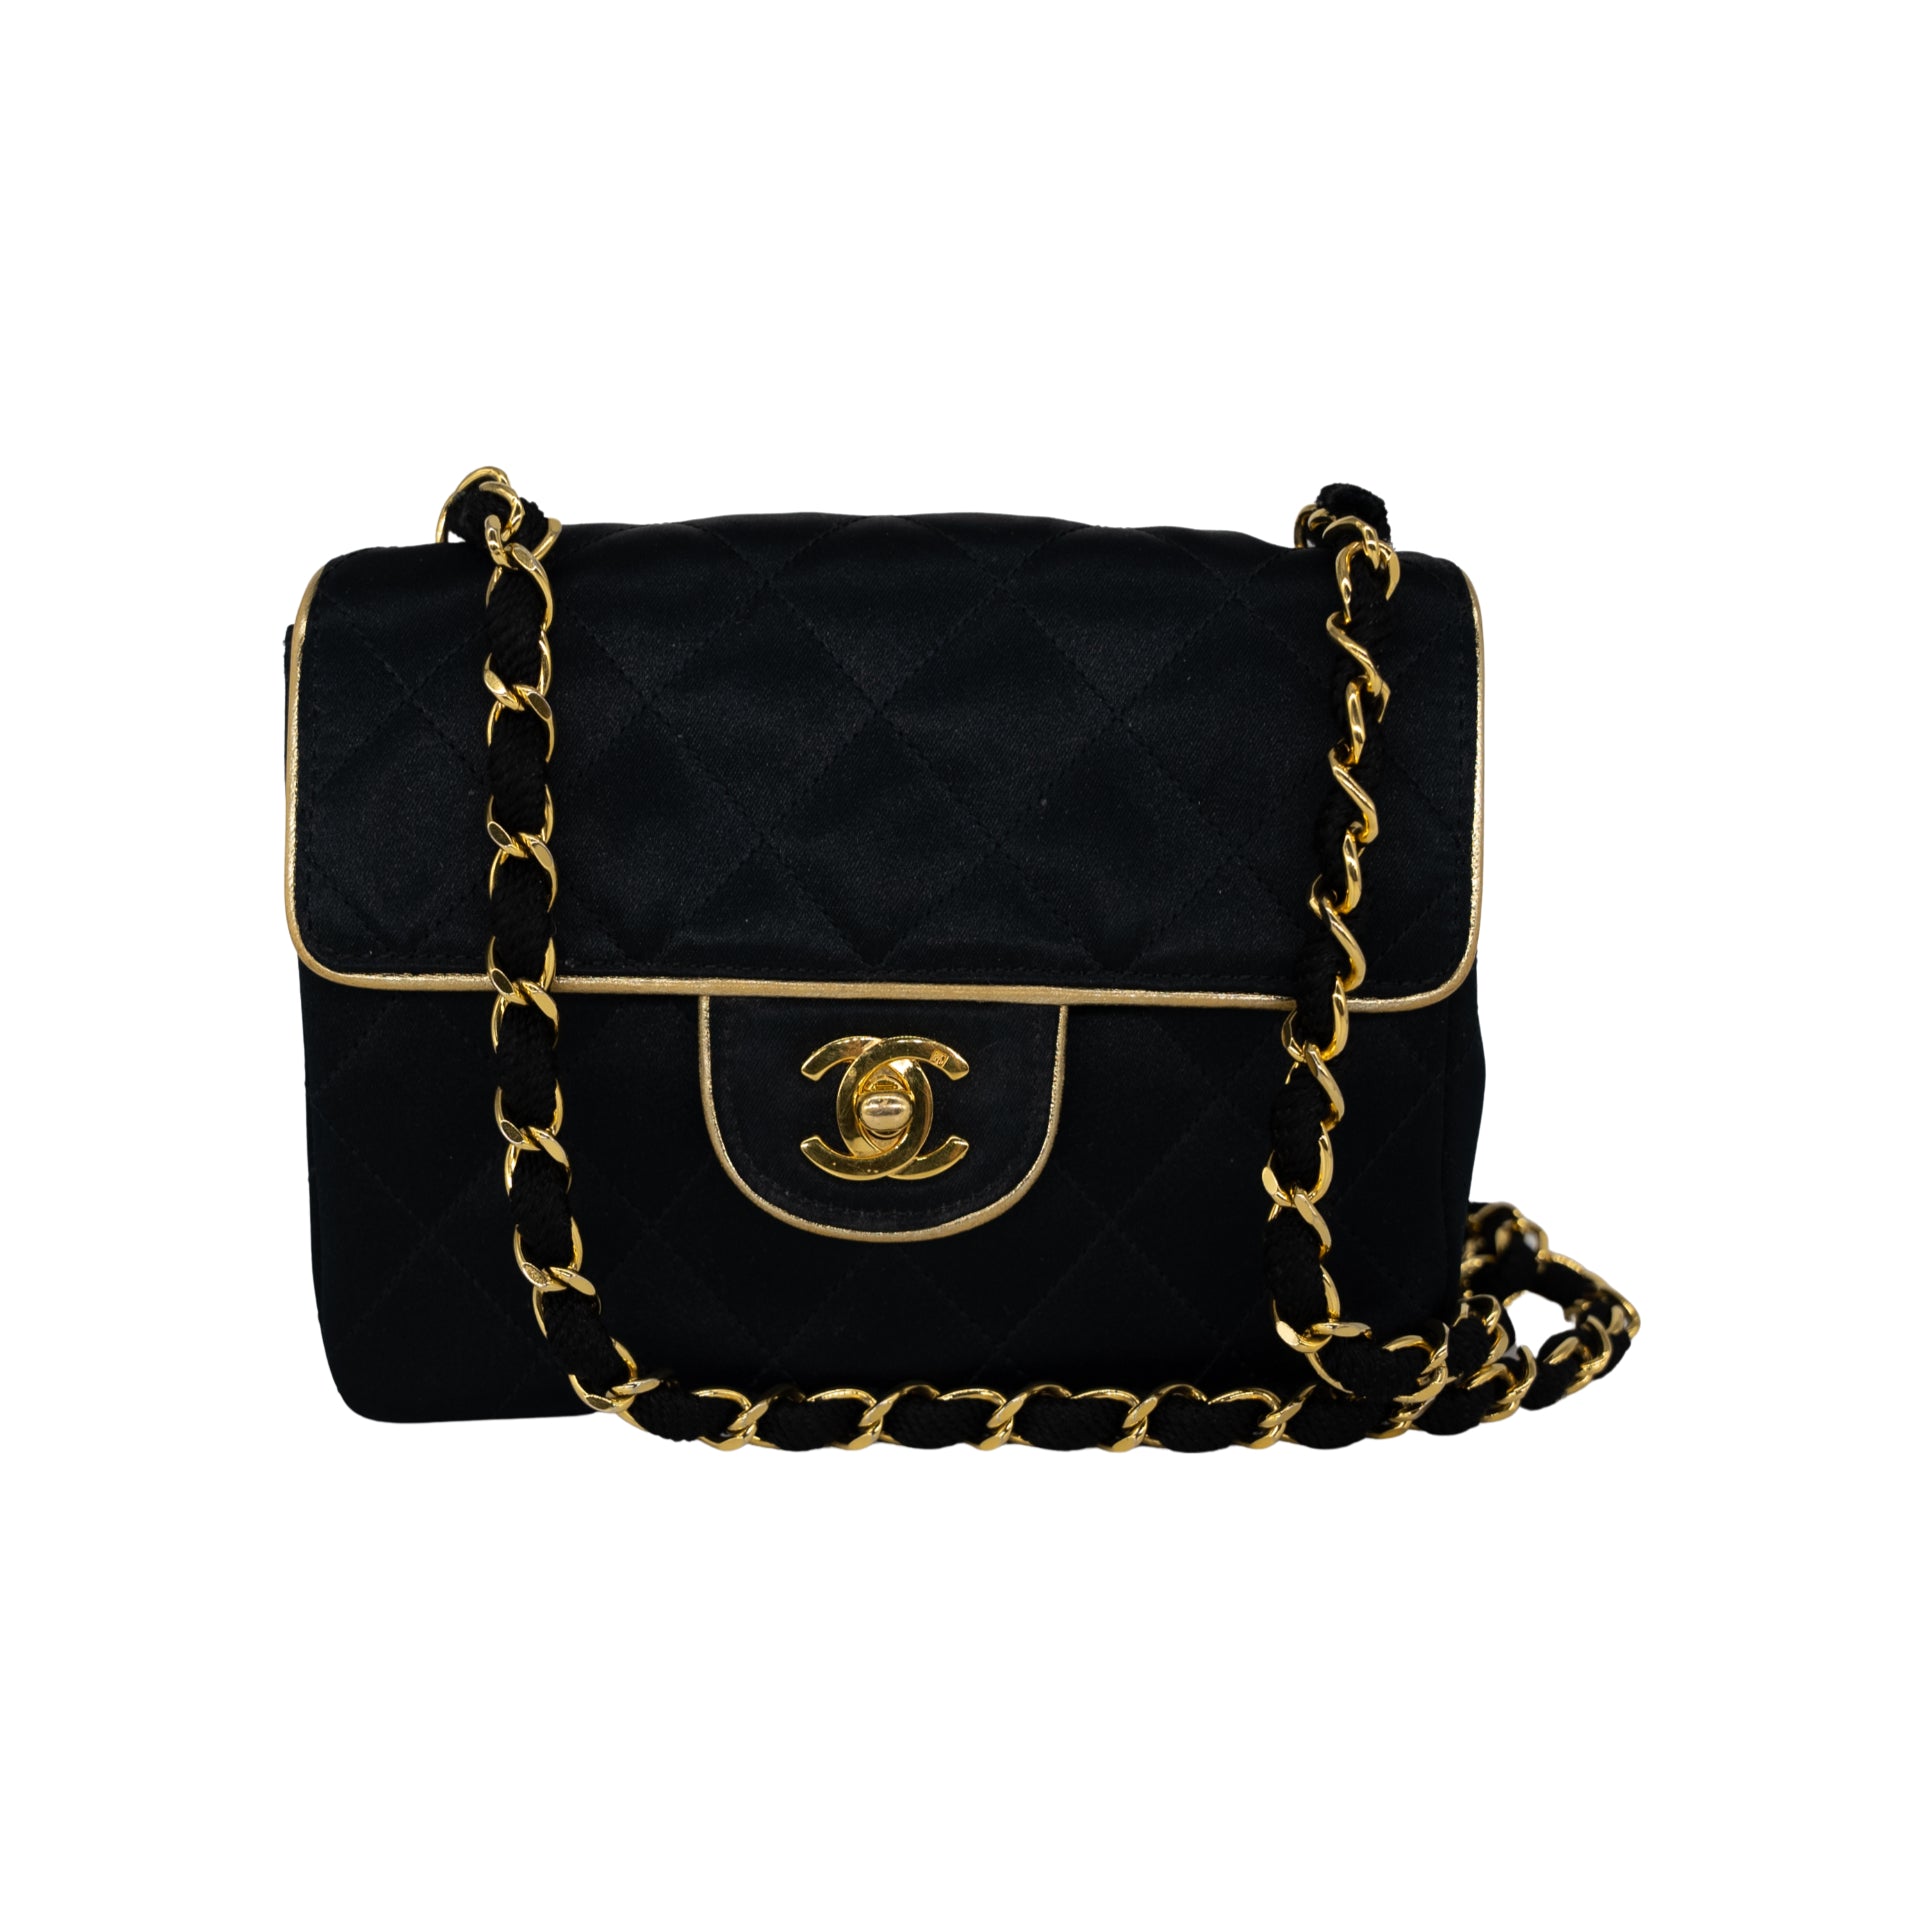 Christian Dior Embellished Beaded Black Mini Saddle Bag Limited Edition -  Rare